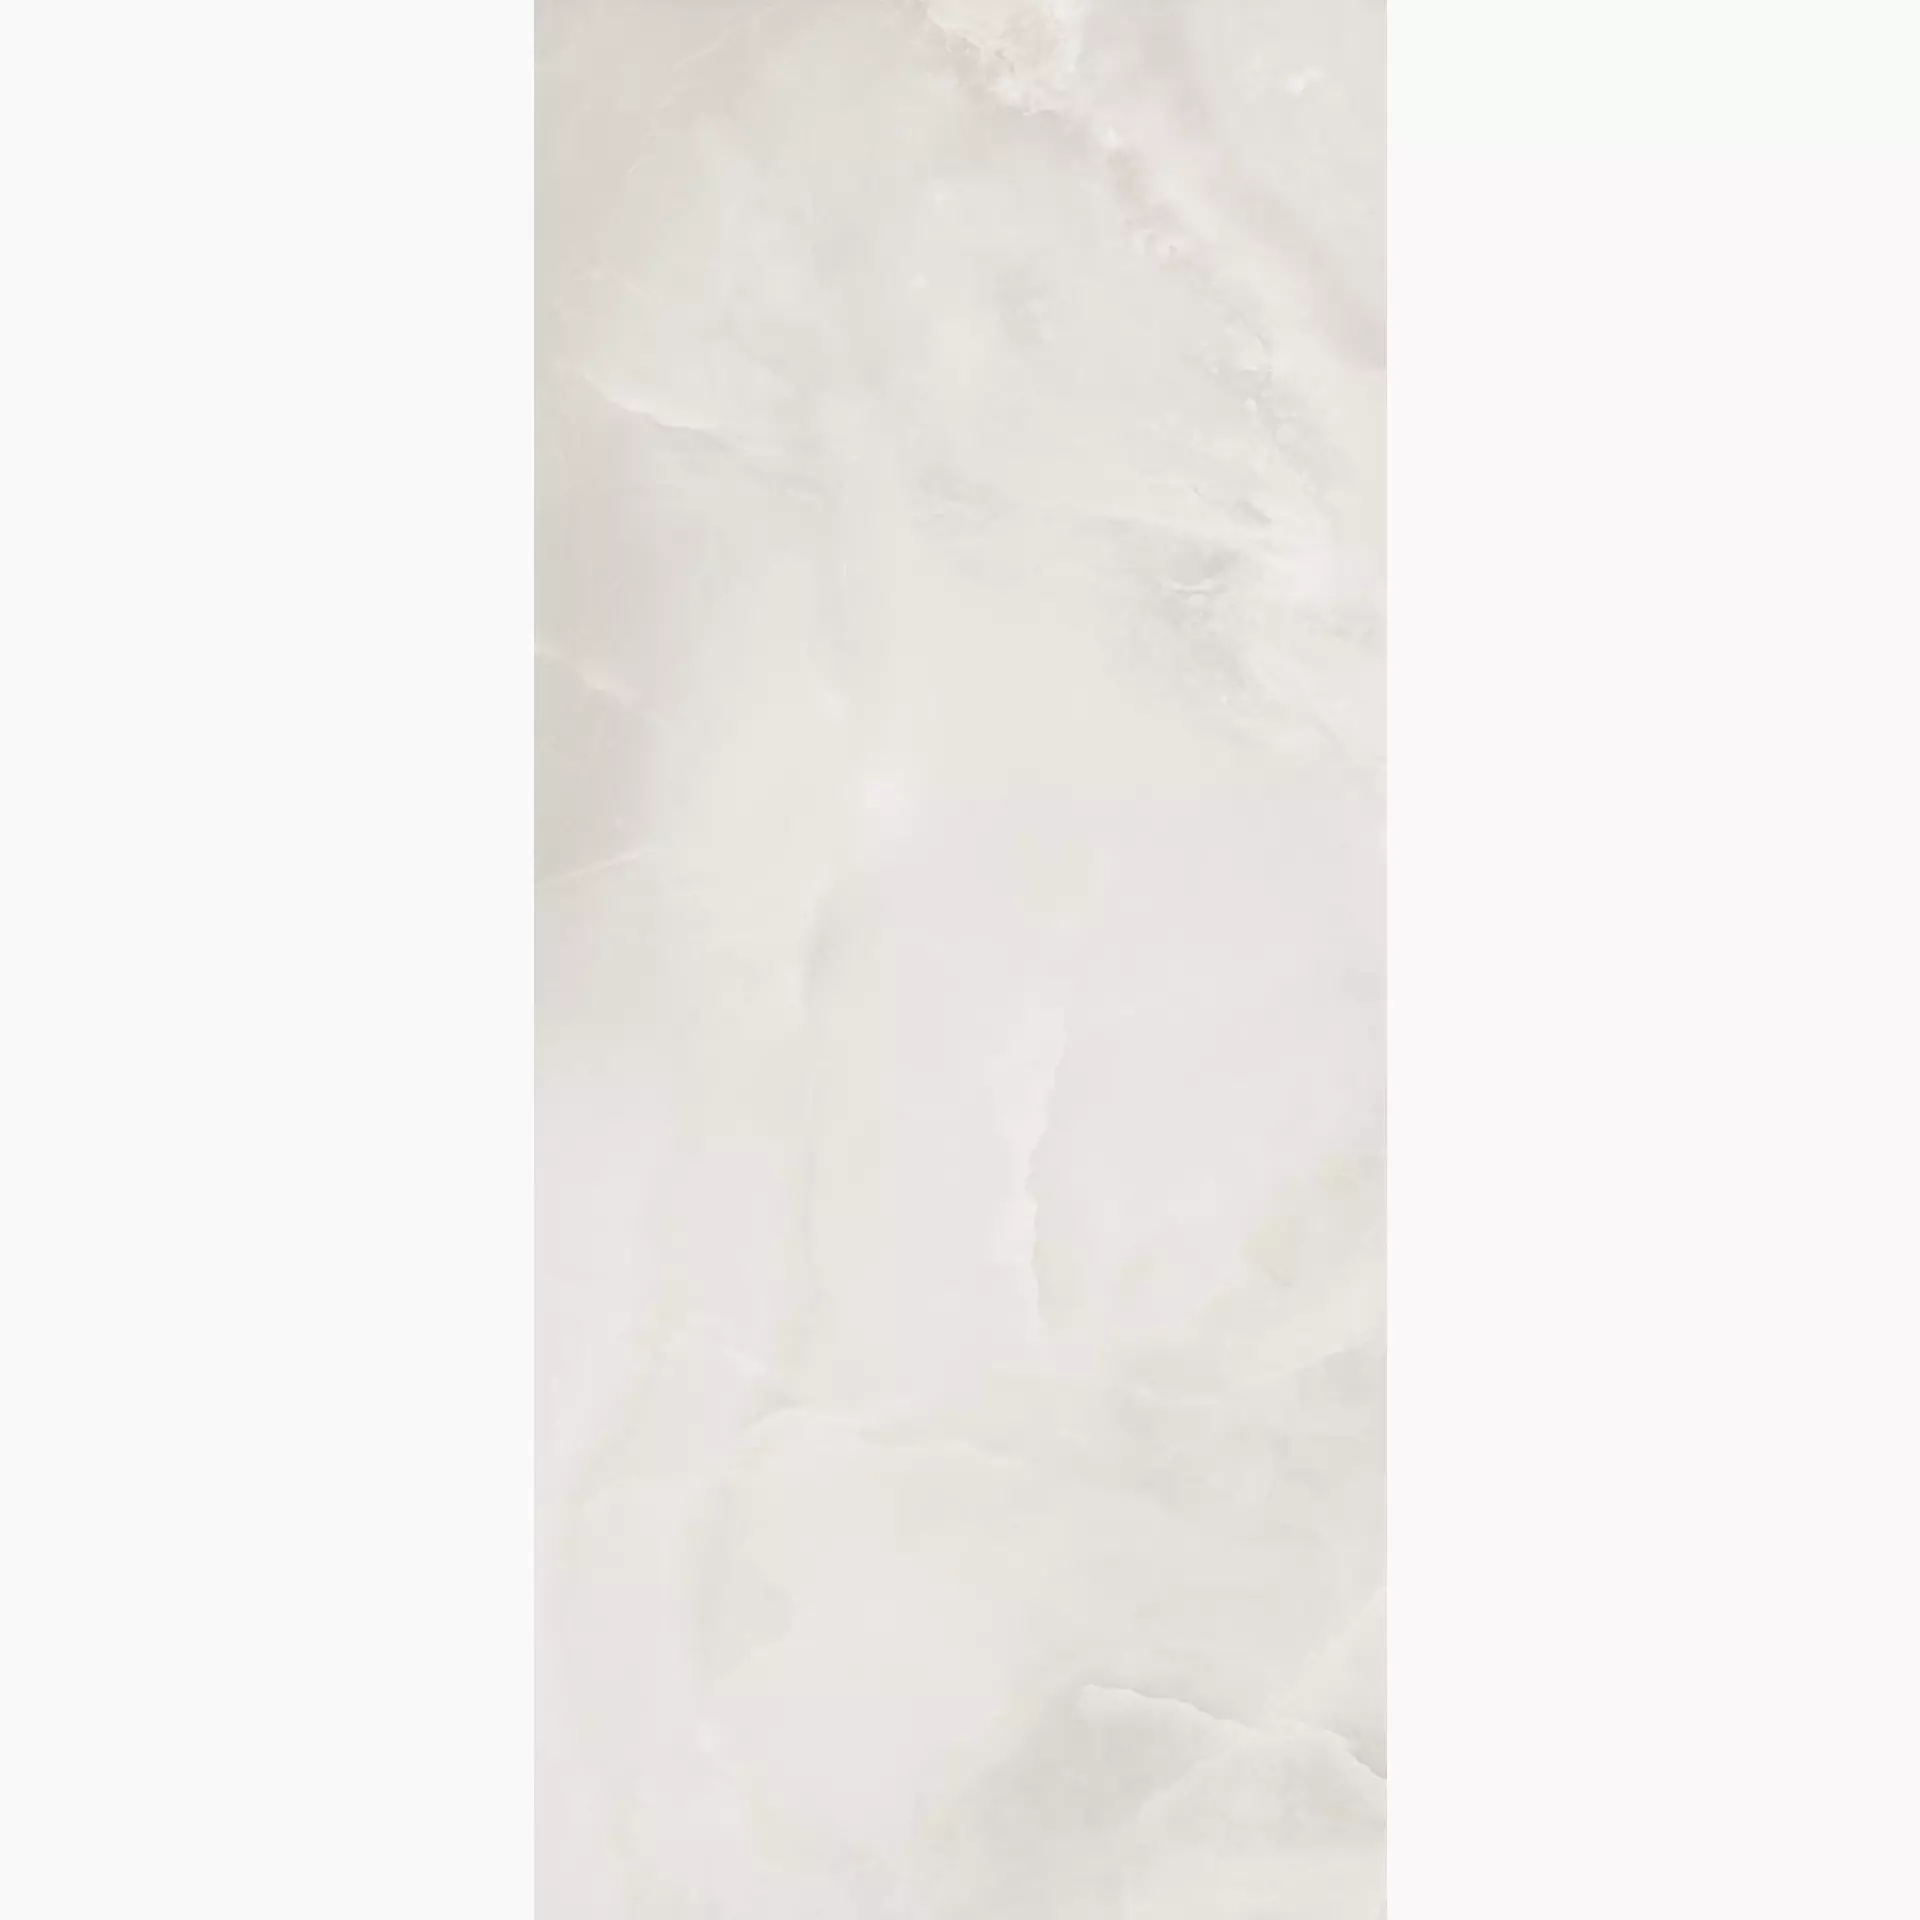 La Faenza Bianco White Natural Flat Matt 166246 90x180cm rectified 10mm - ONICE 9018 RM